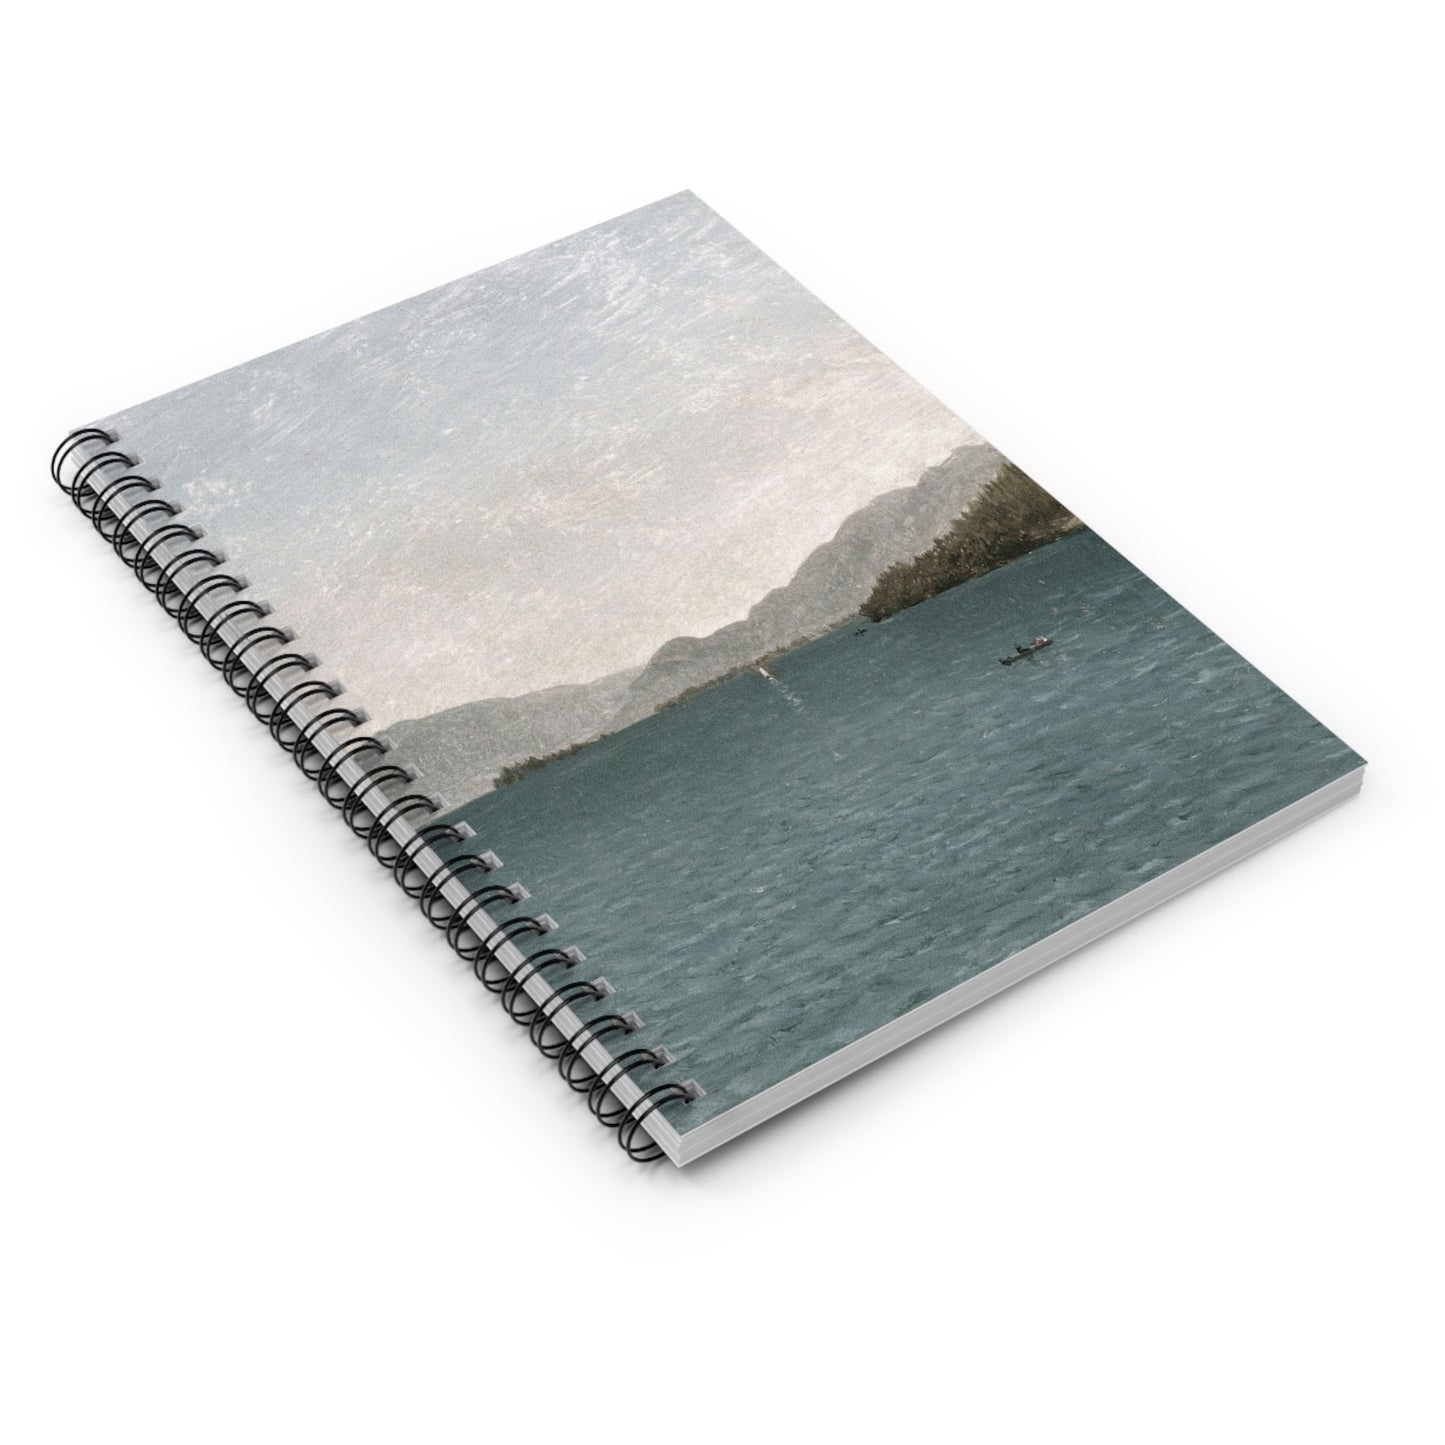 Minimalist Mountains Spiral Notebook Laying Flat on White Surface